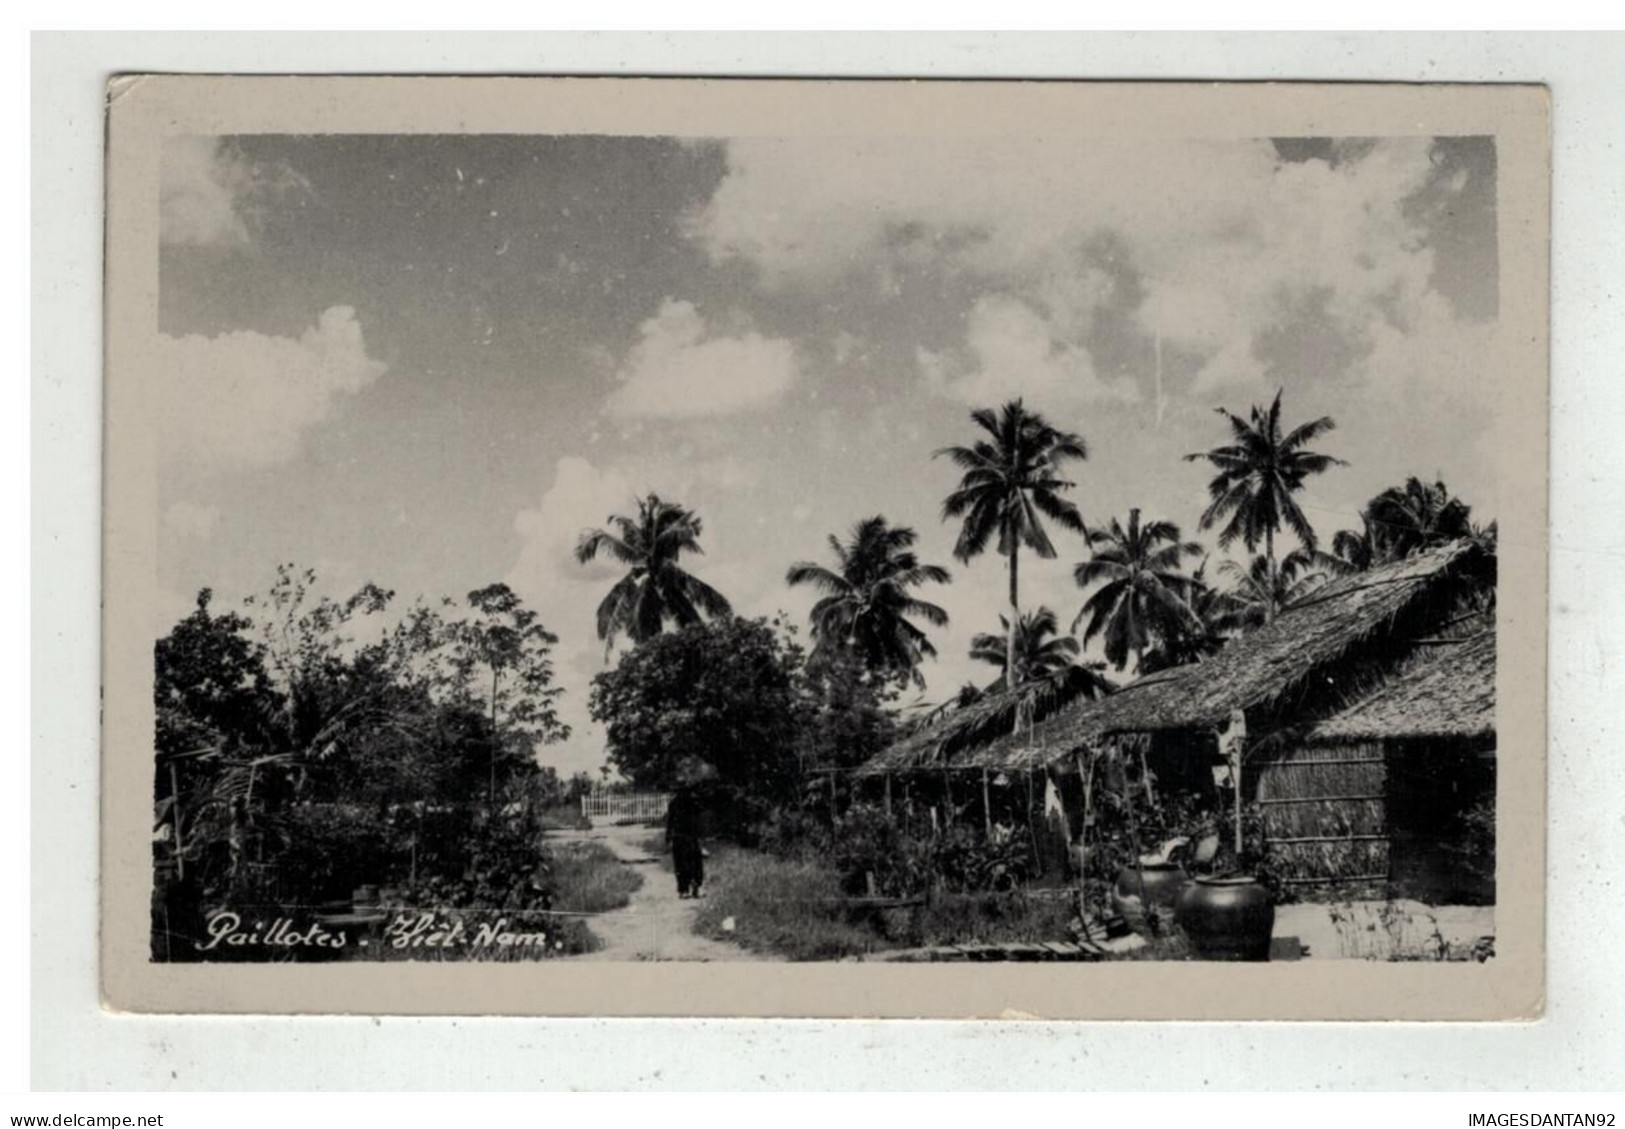 TONKIN INDOCHINE VIETNAM SAIGON #18510 PAILLOTES VIET NAM CARTE PHOTO - Viêt-Nam